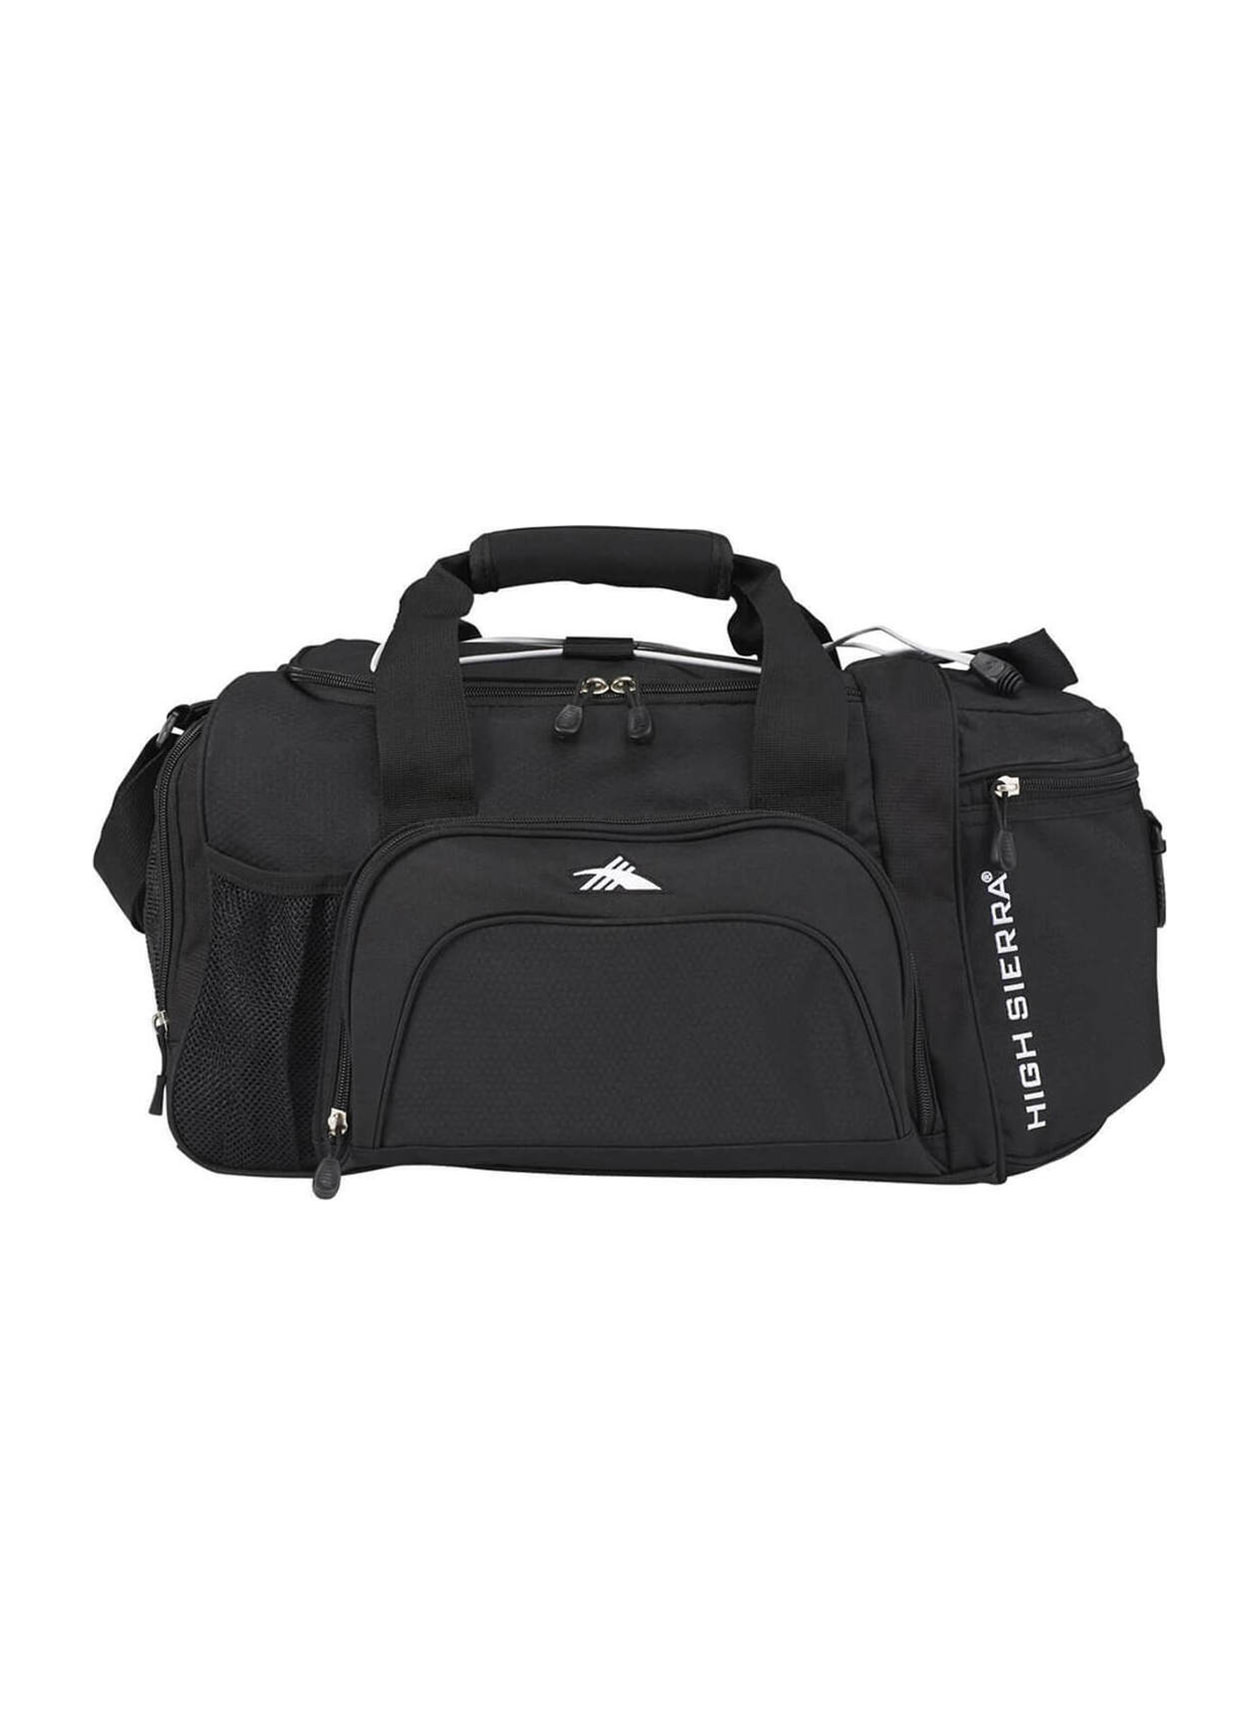 Company Bags | High Sierra Black 22' Switch Blade Sport Duffel Bag